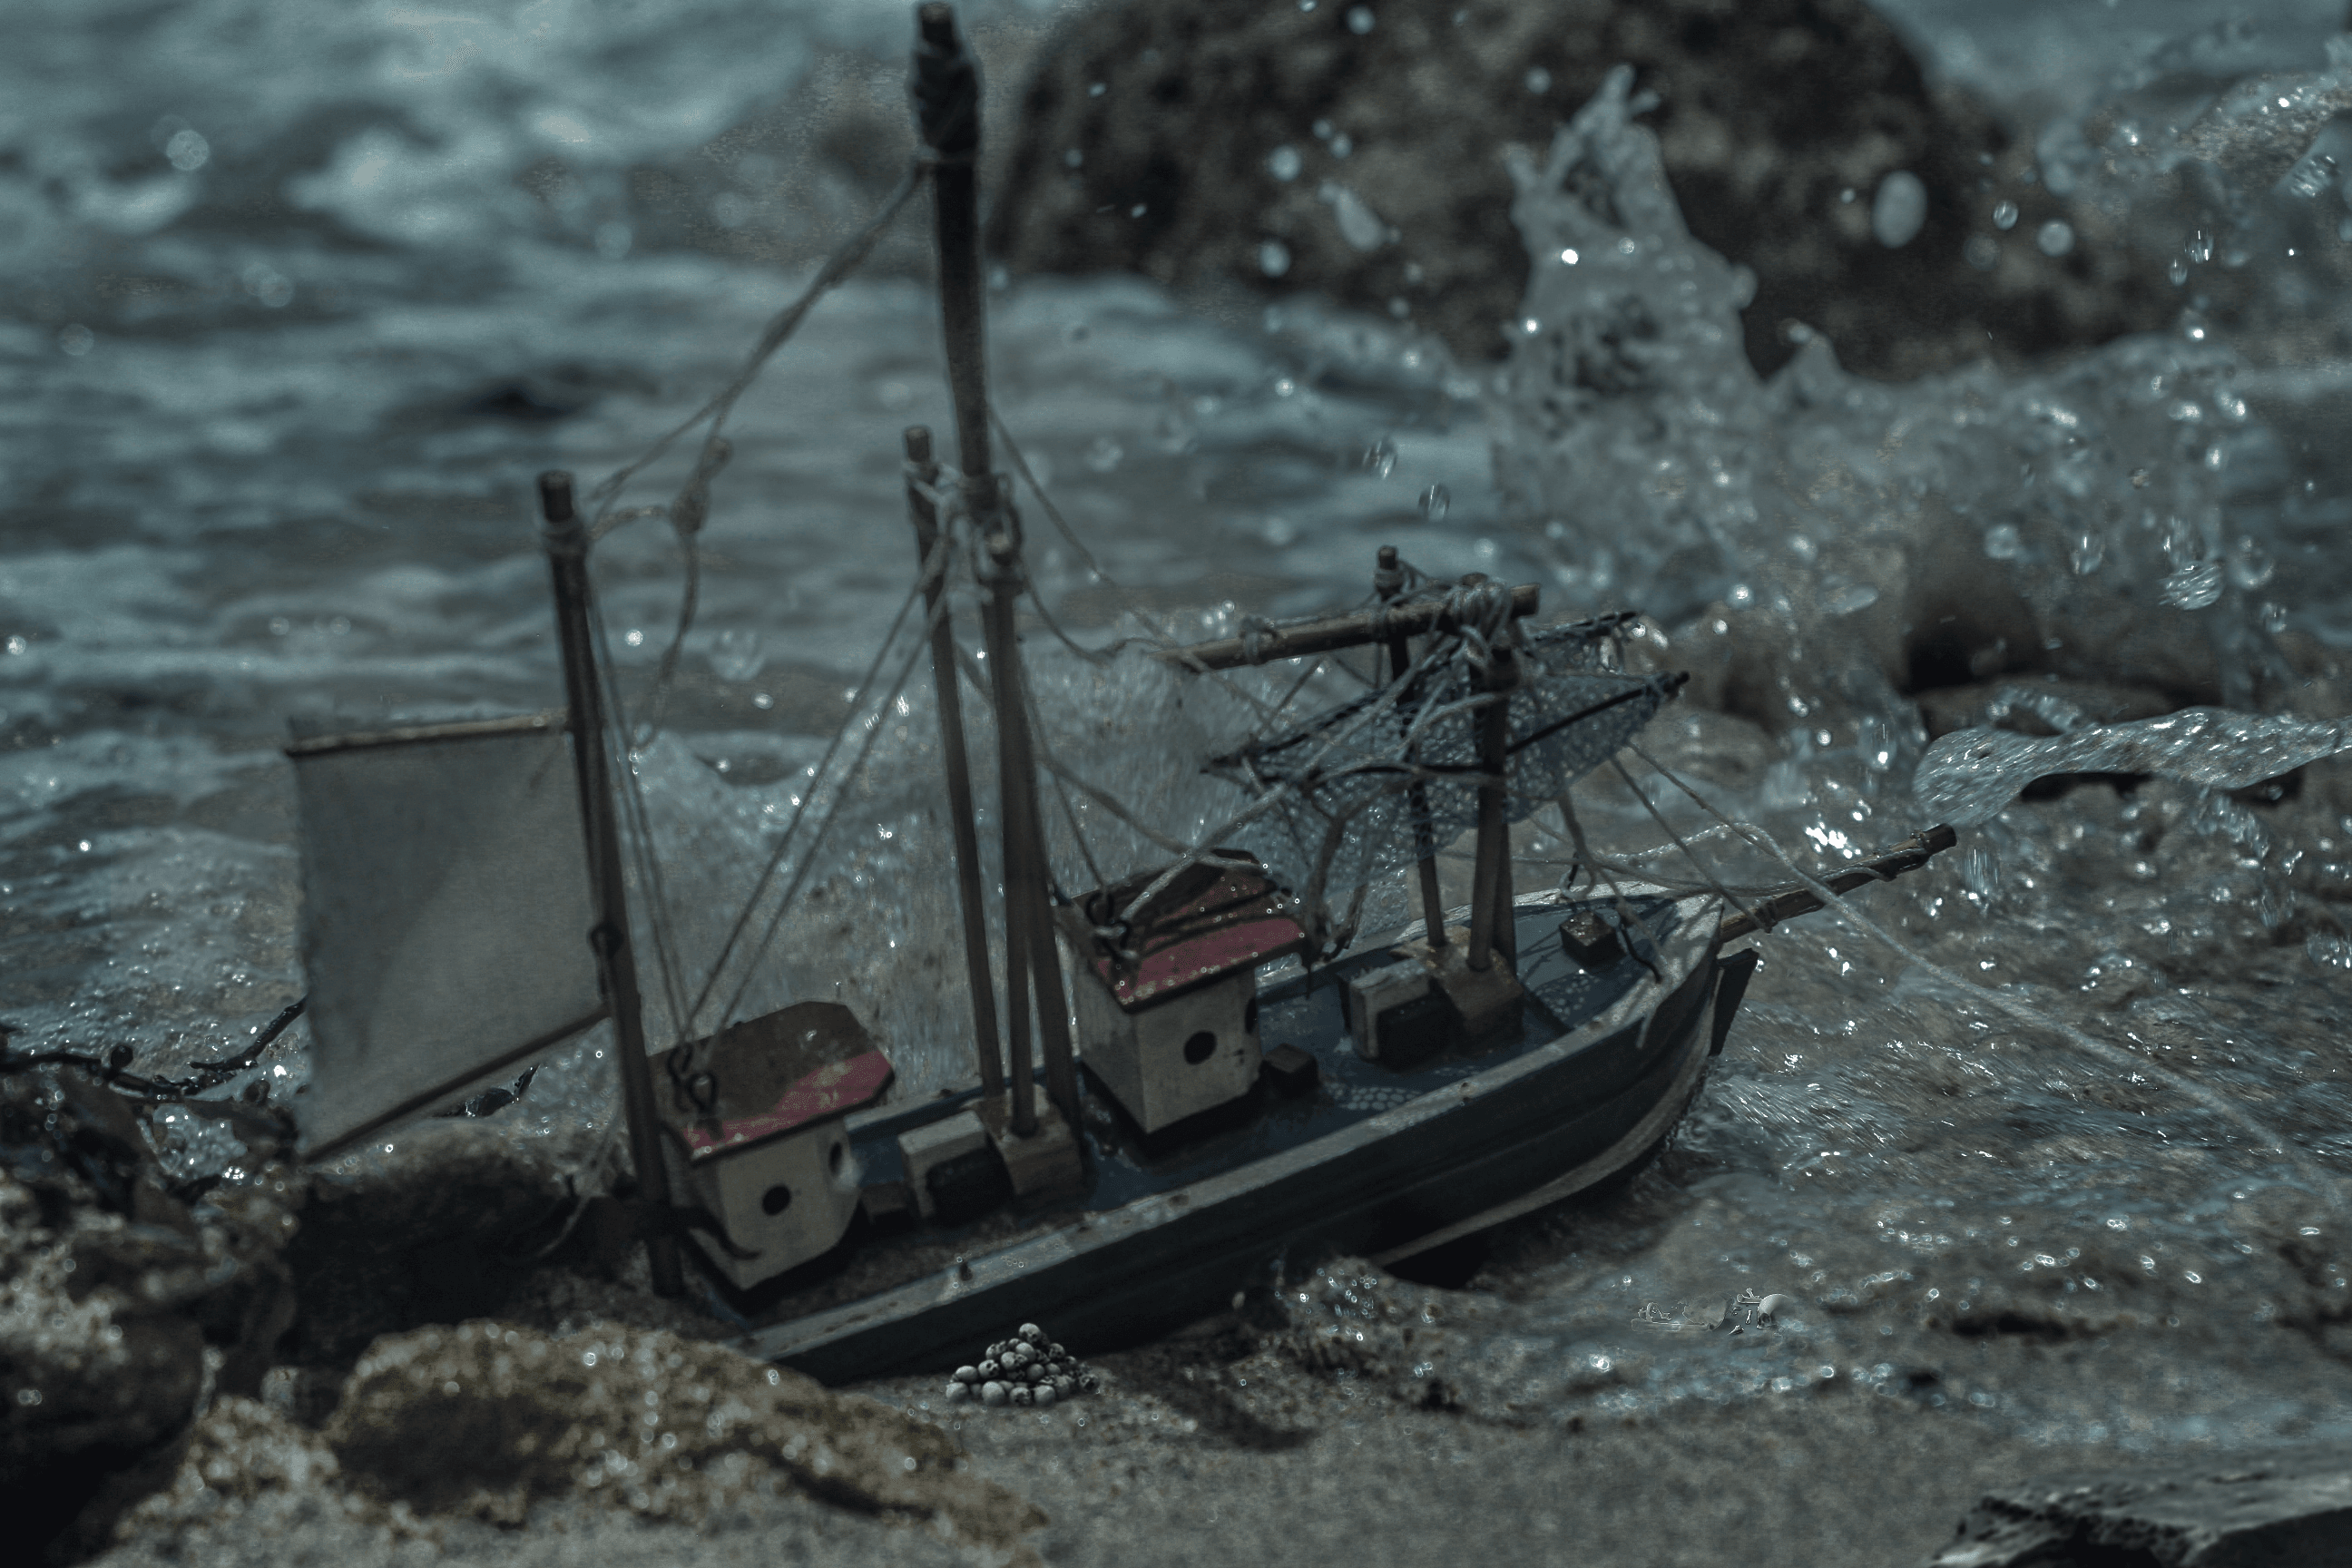 Scale model photography (Abandoned Boat)